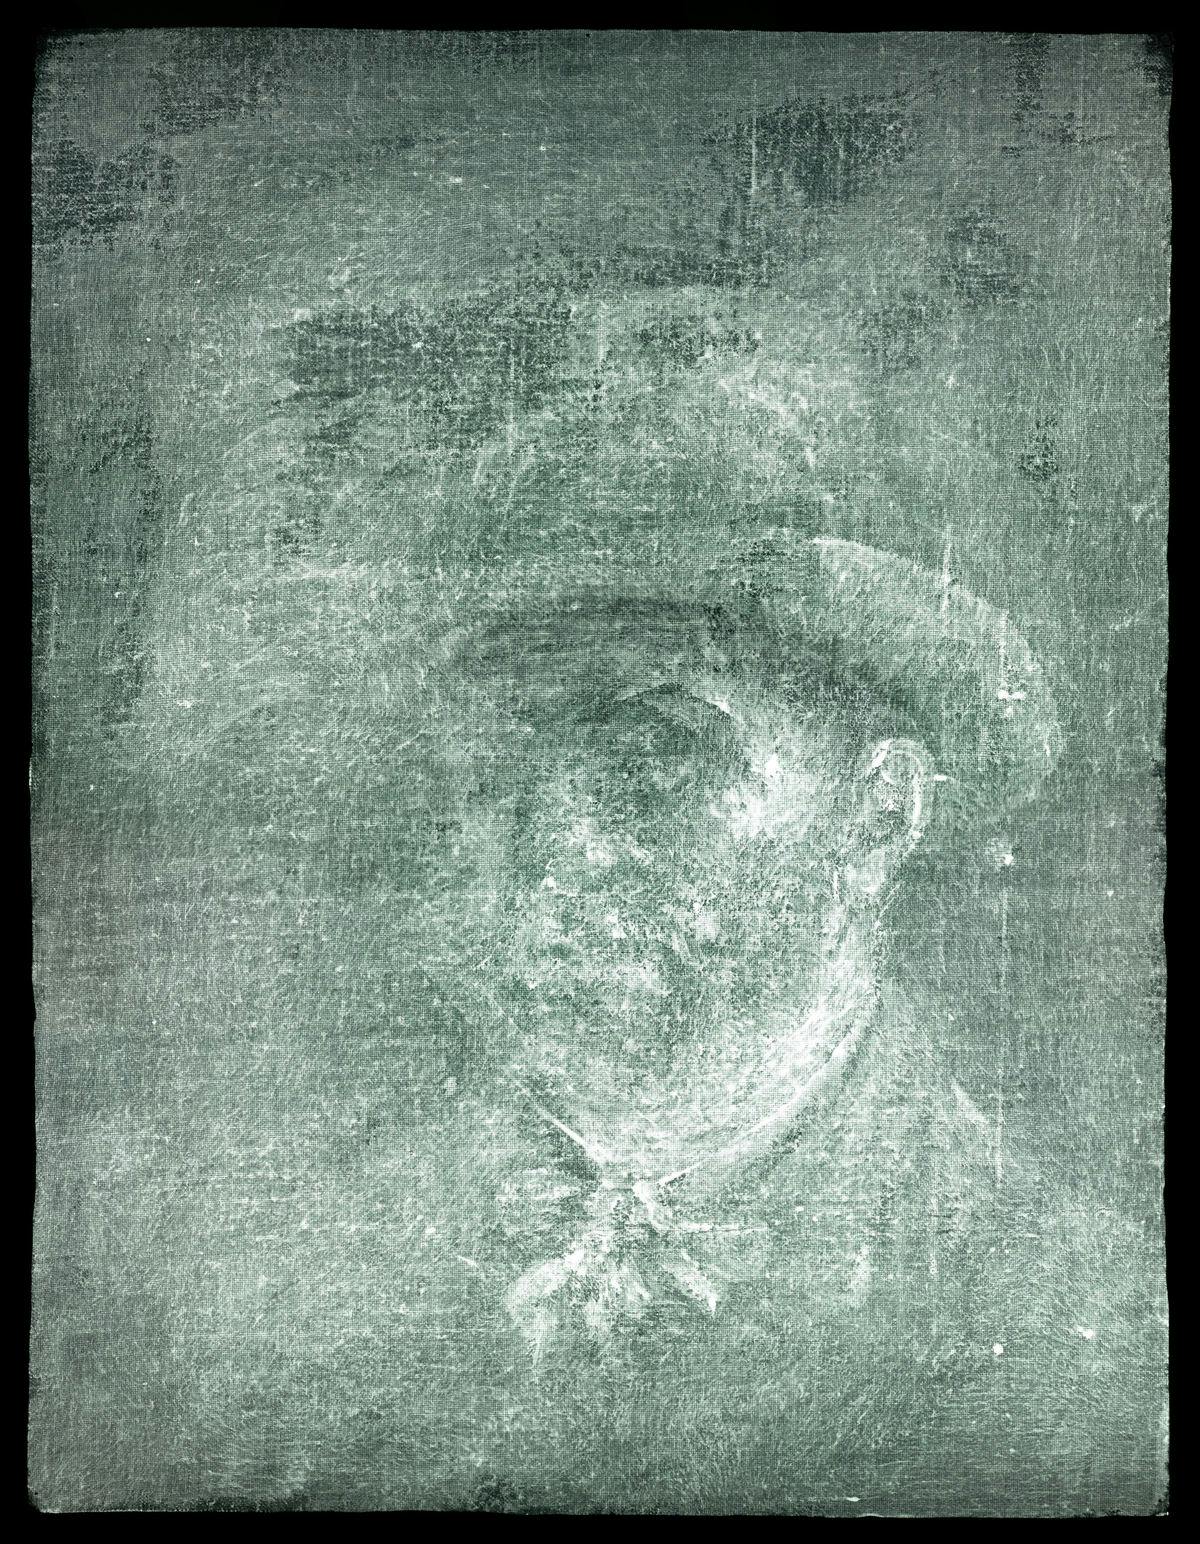 Vincent van Gogh's Self-Portrait Discovered